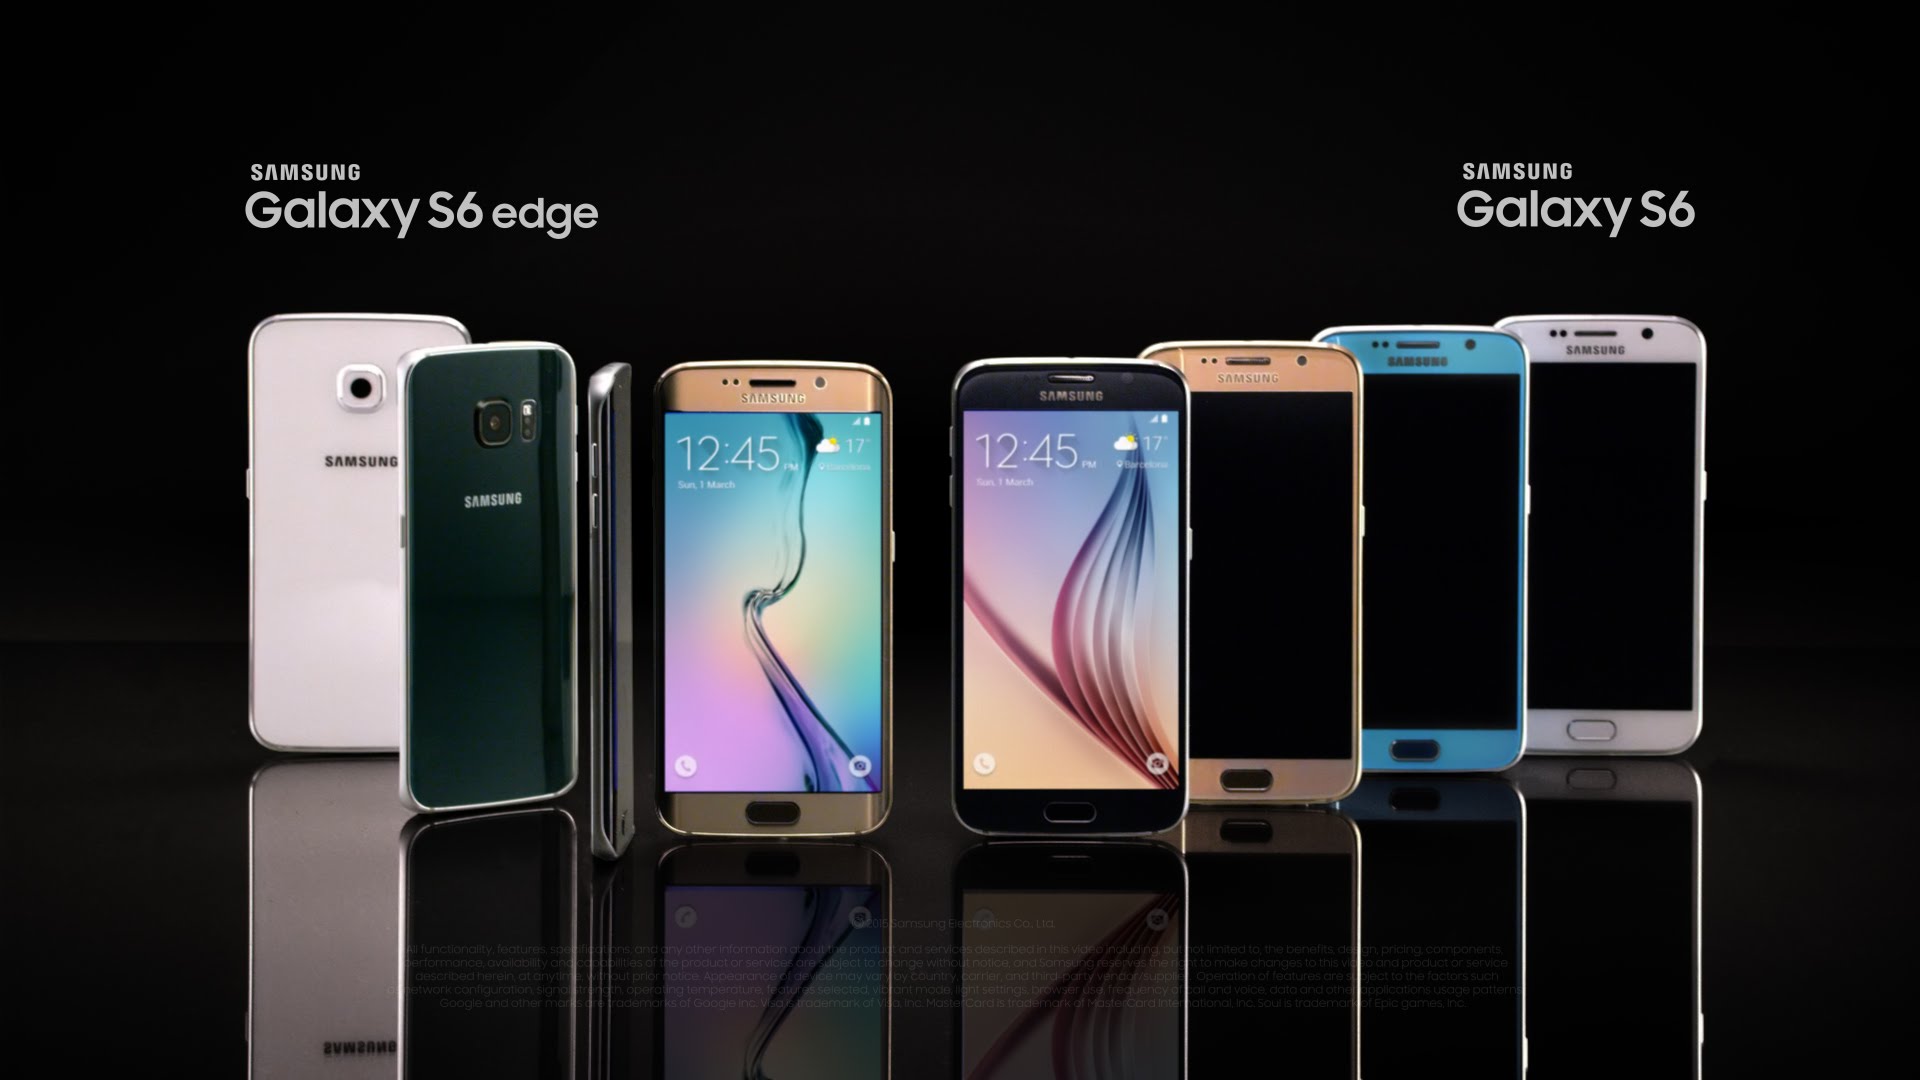 Samsung Galaxy S6 And S6 Edge - 1920x1080 Wallpaper 